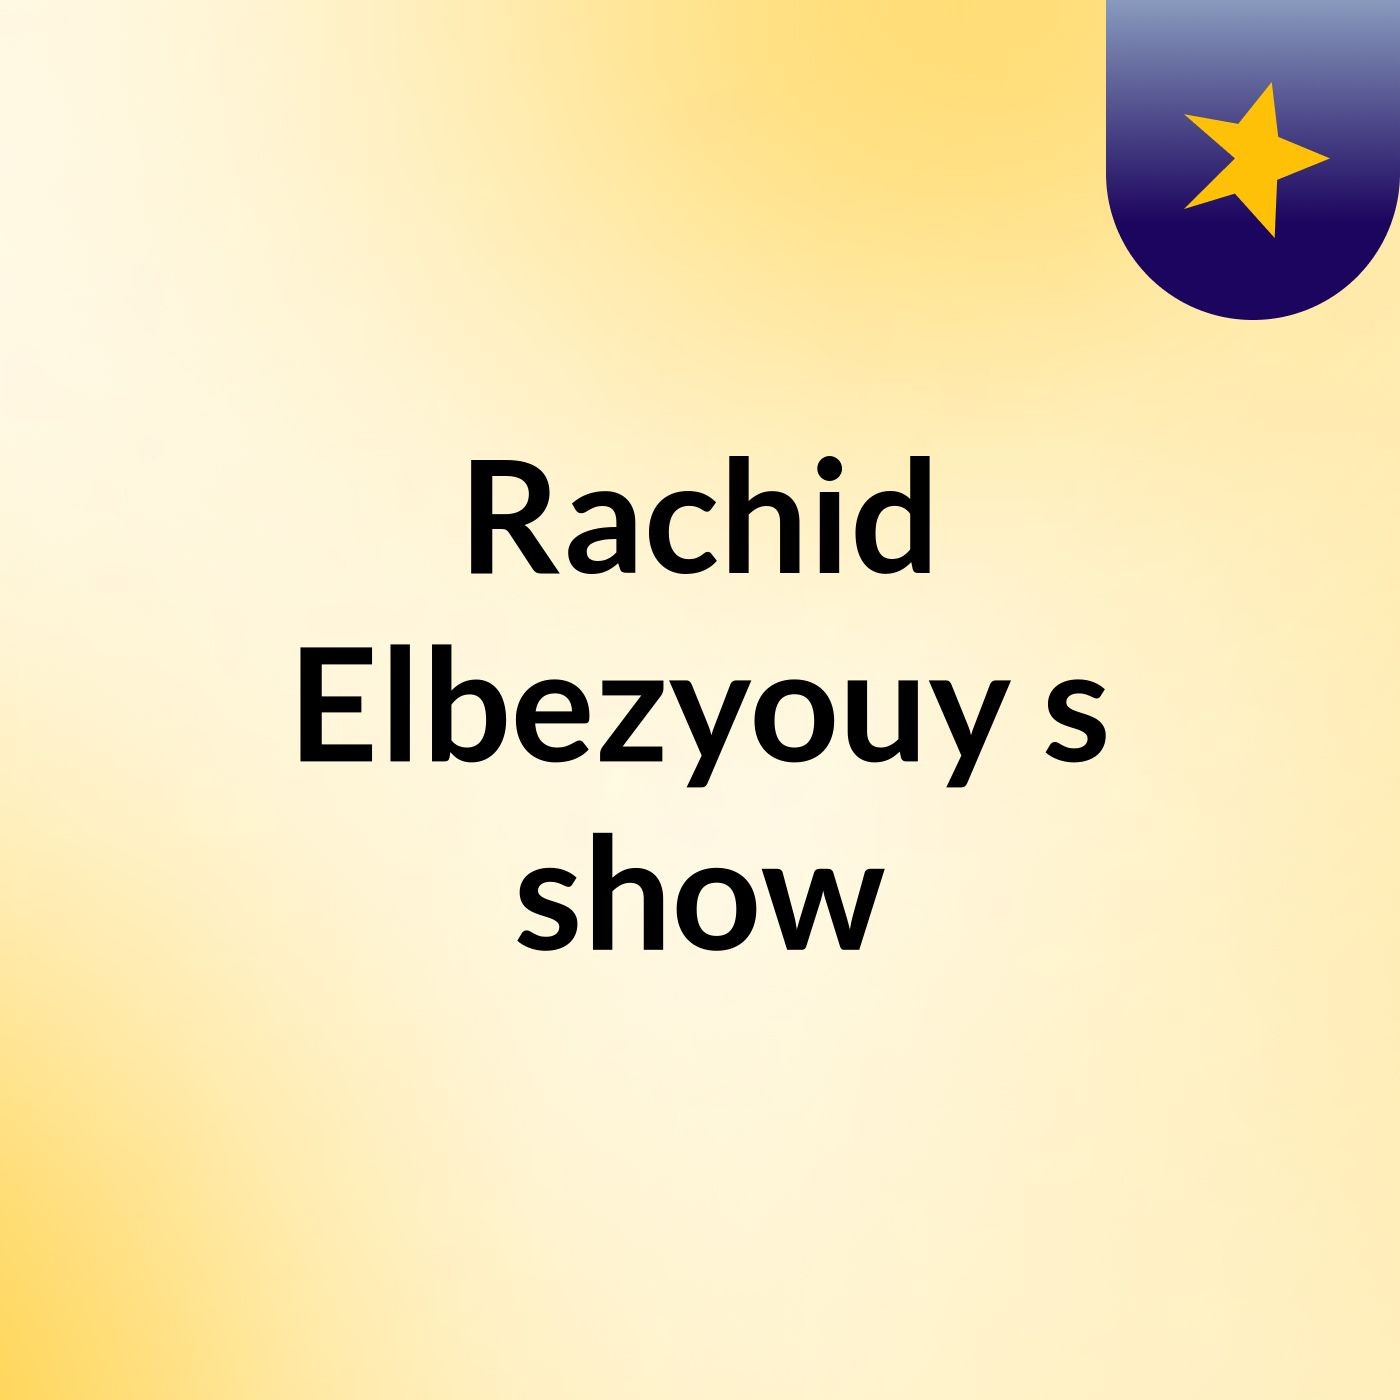 Rachid Elbezyouy's show